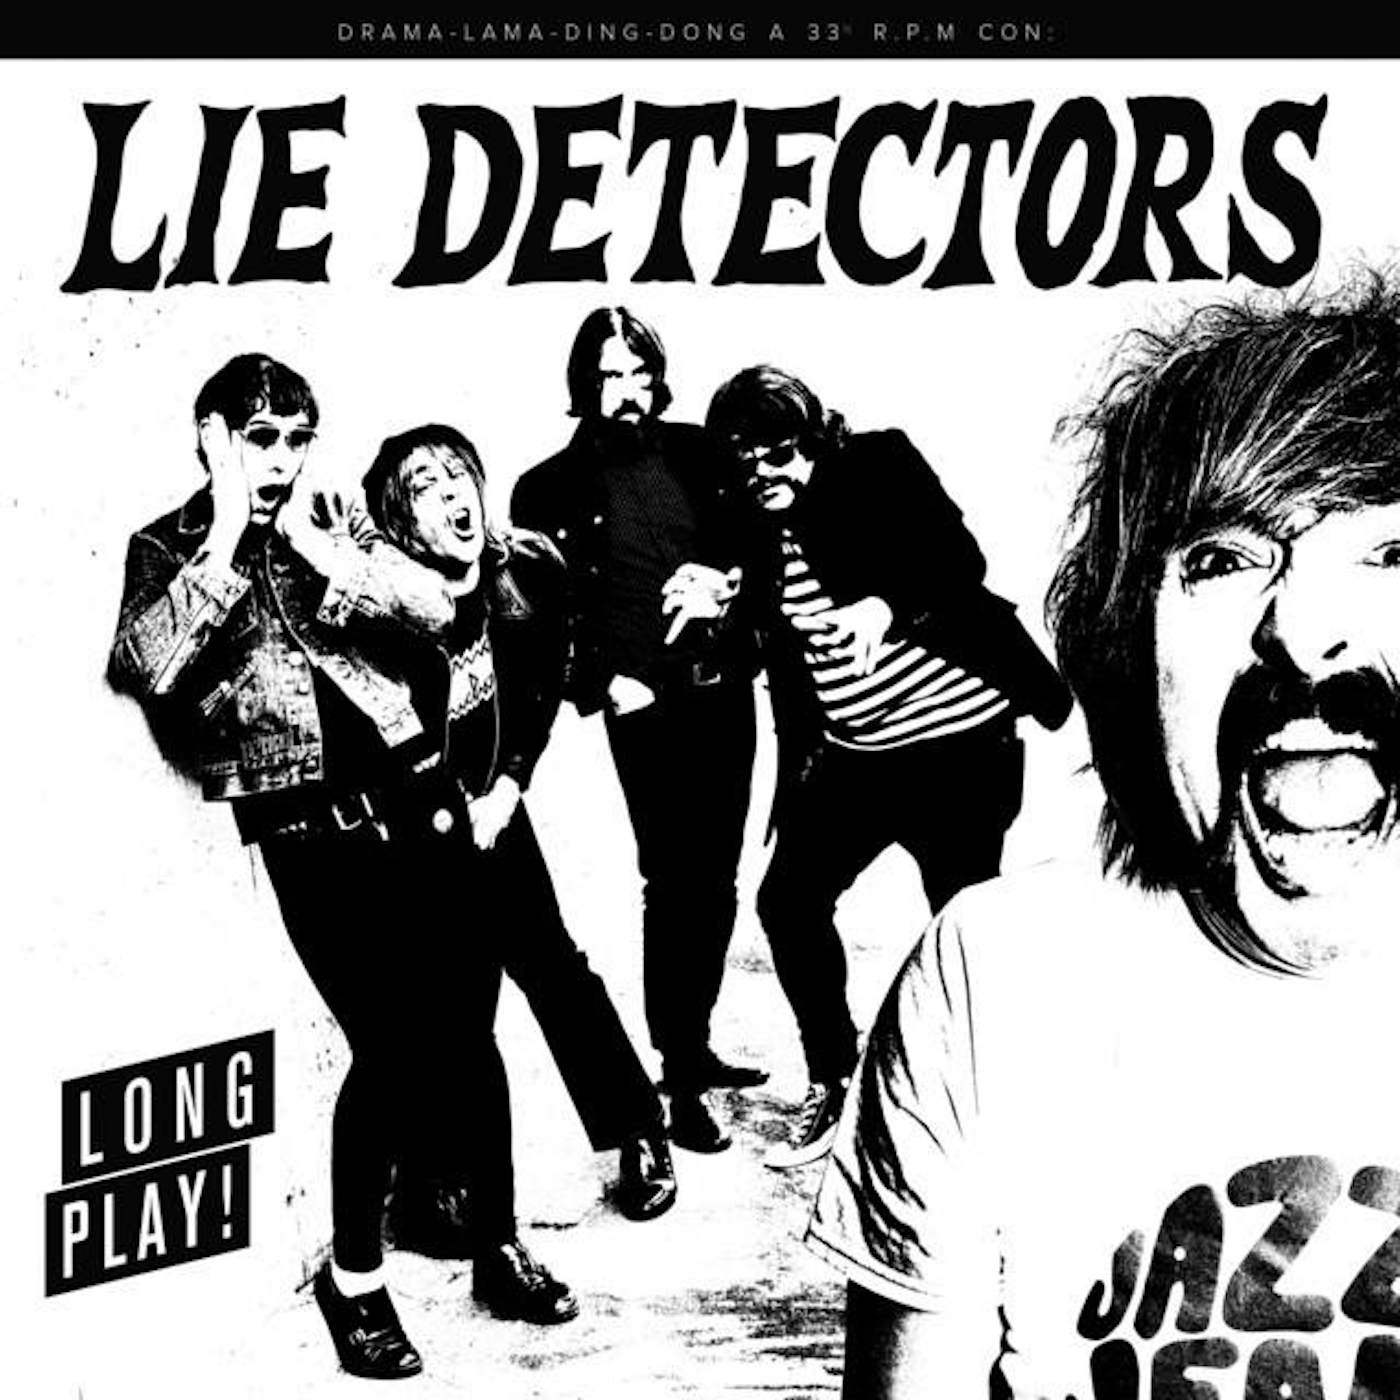 Lie Detectors